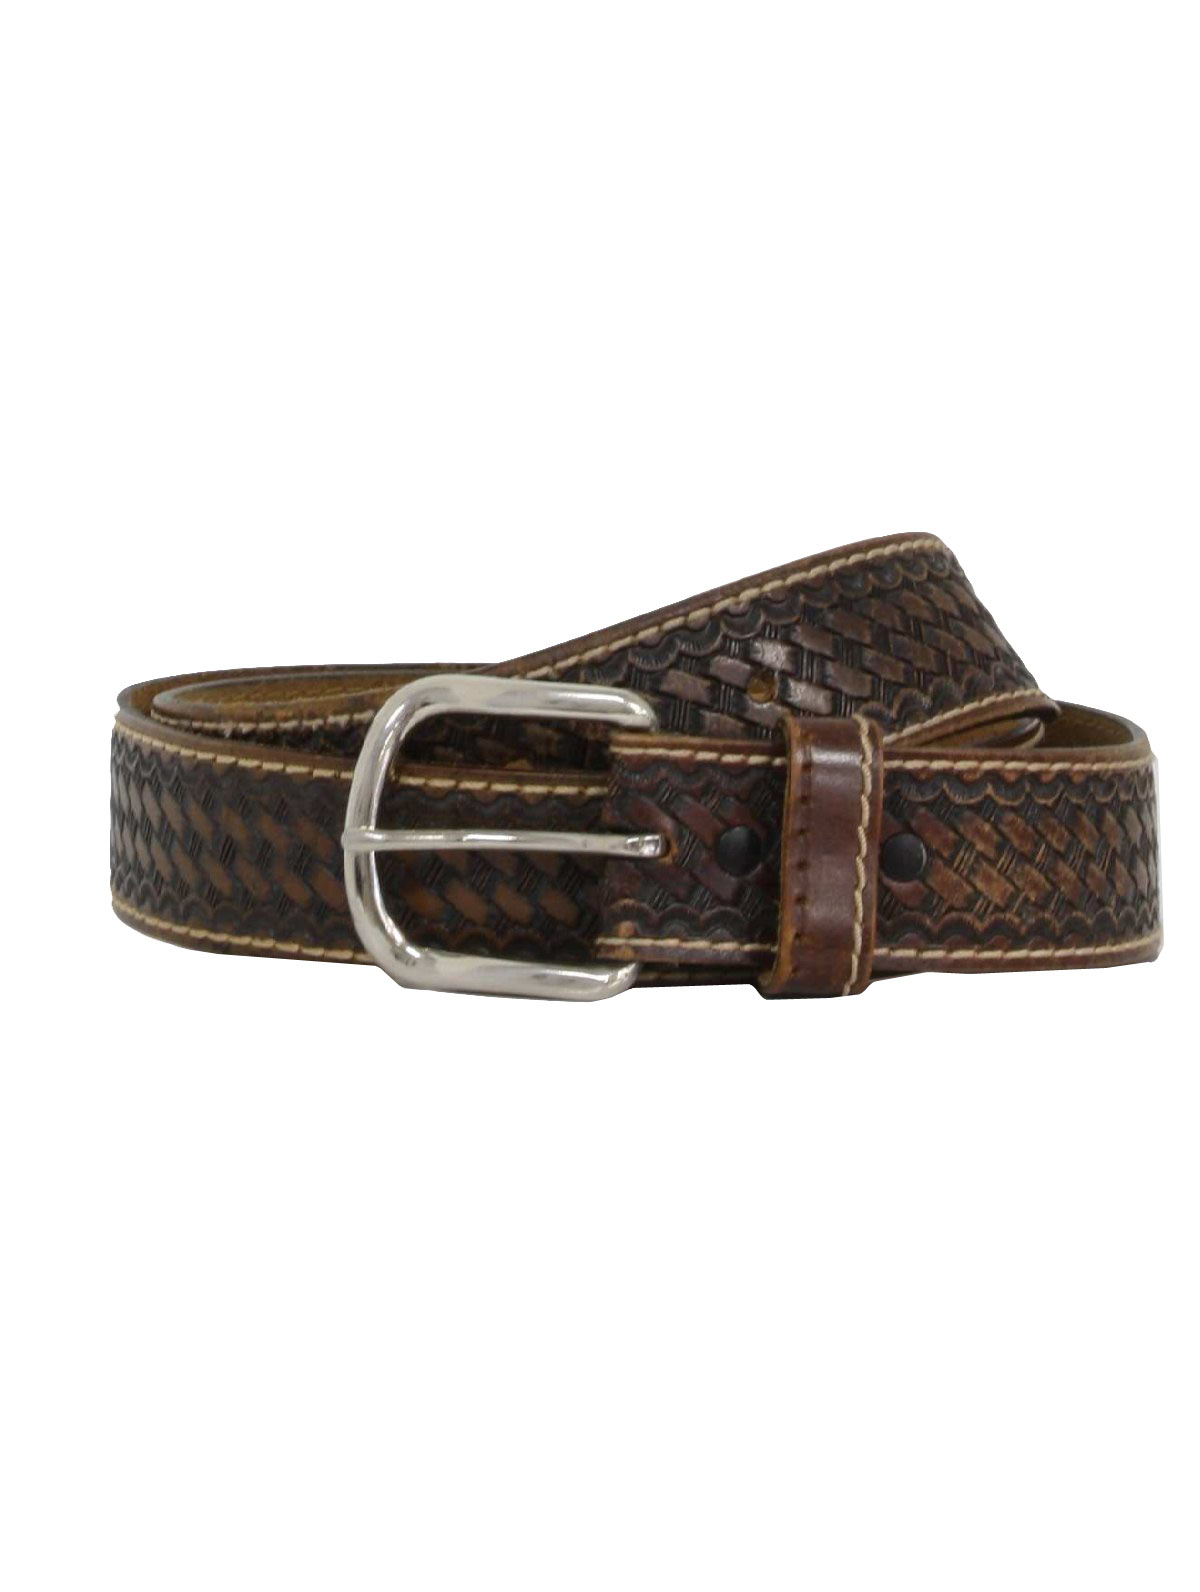 Vintage 70s Braided Leather Belt